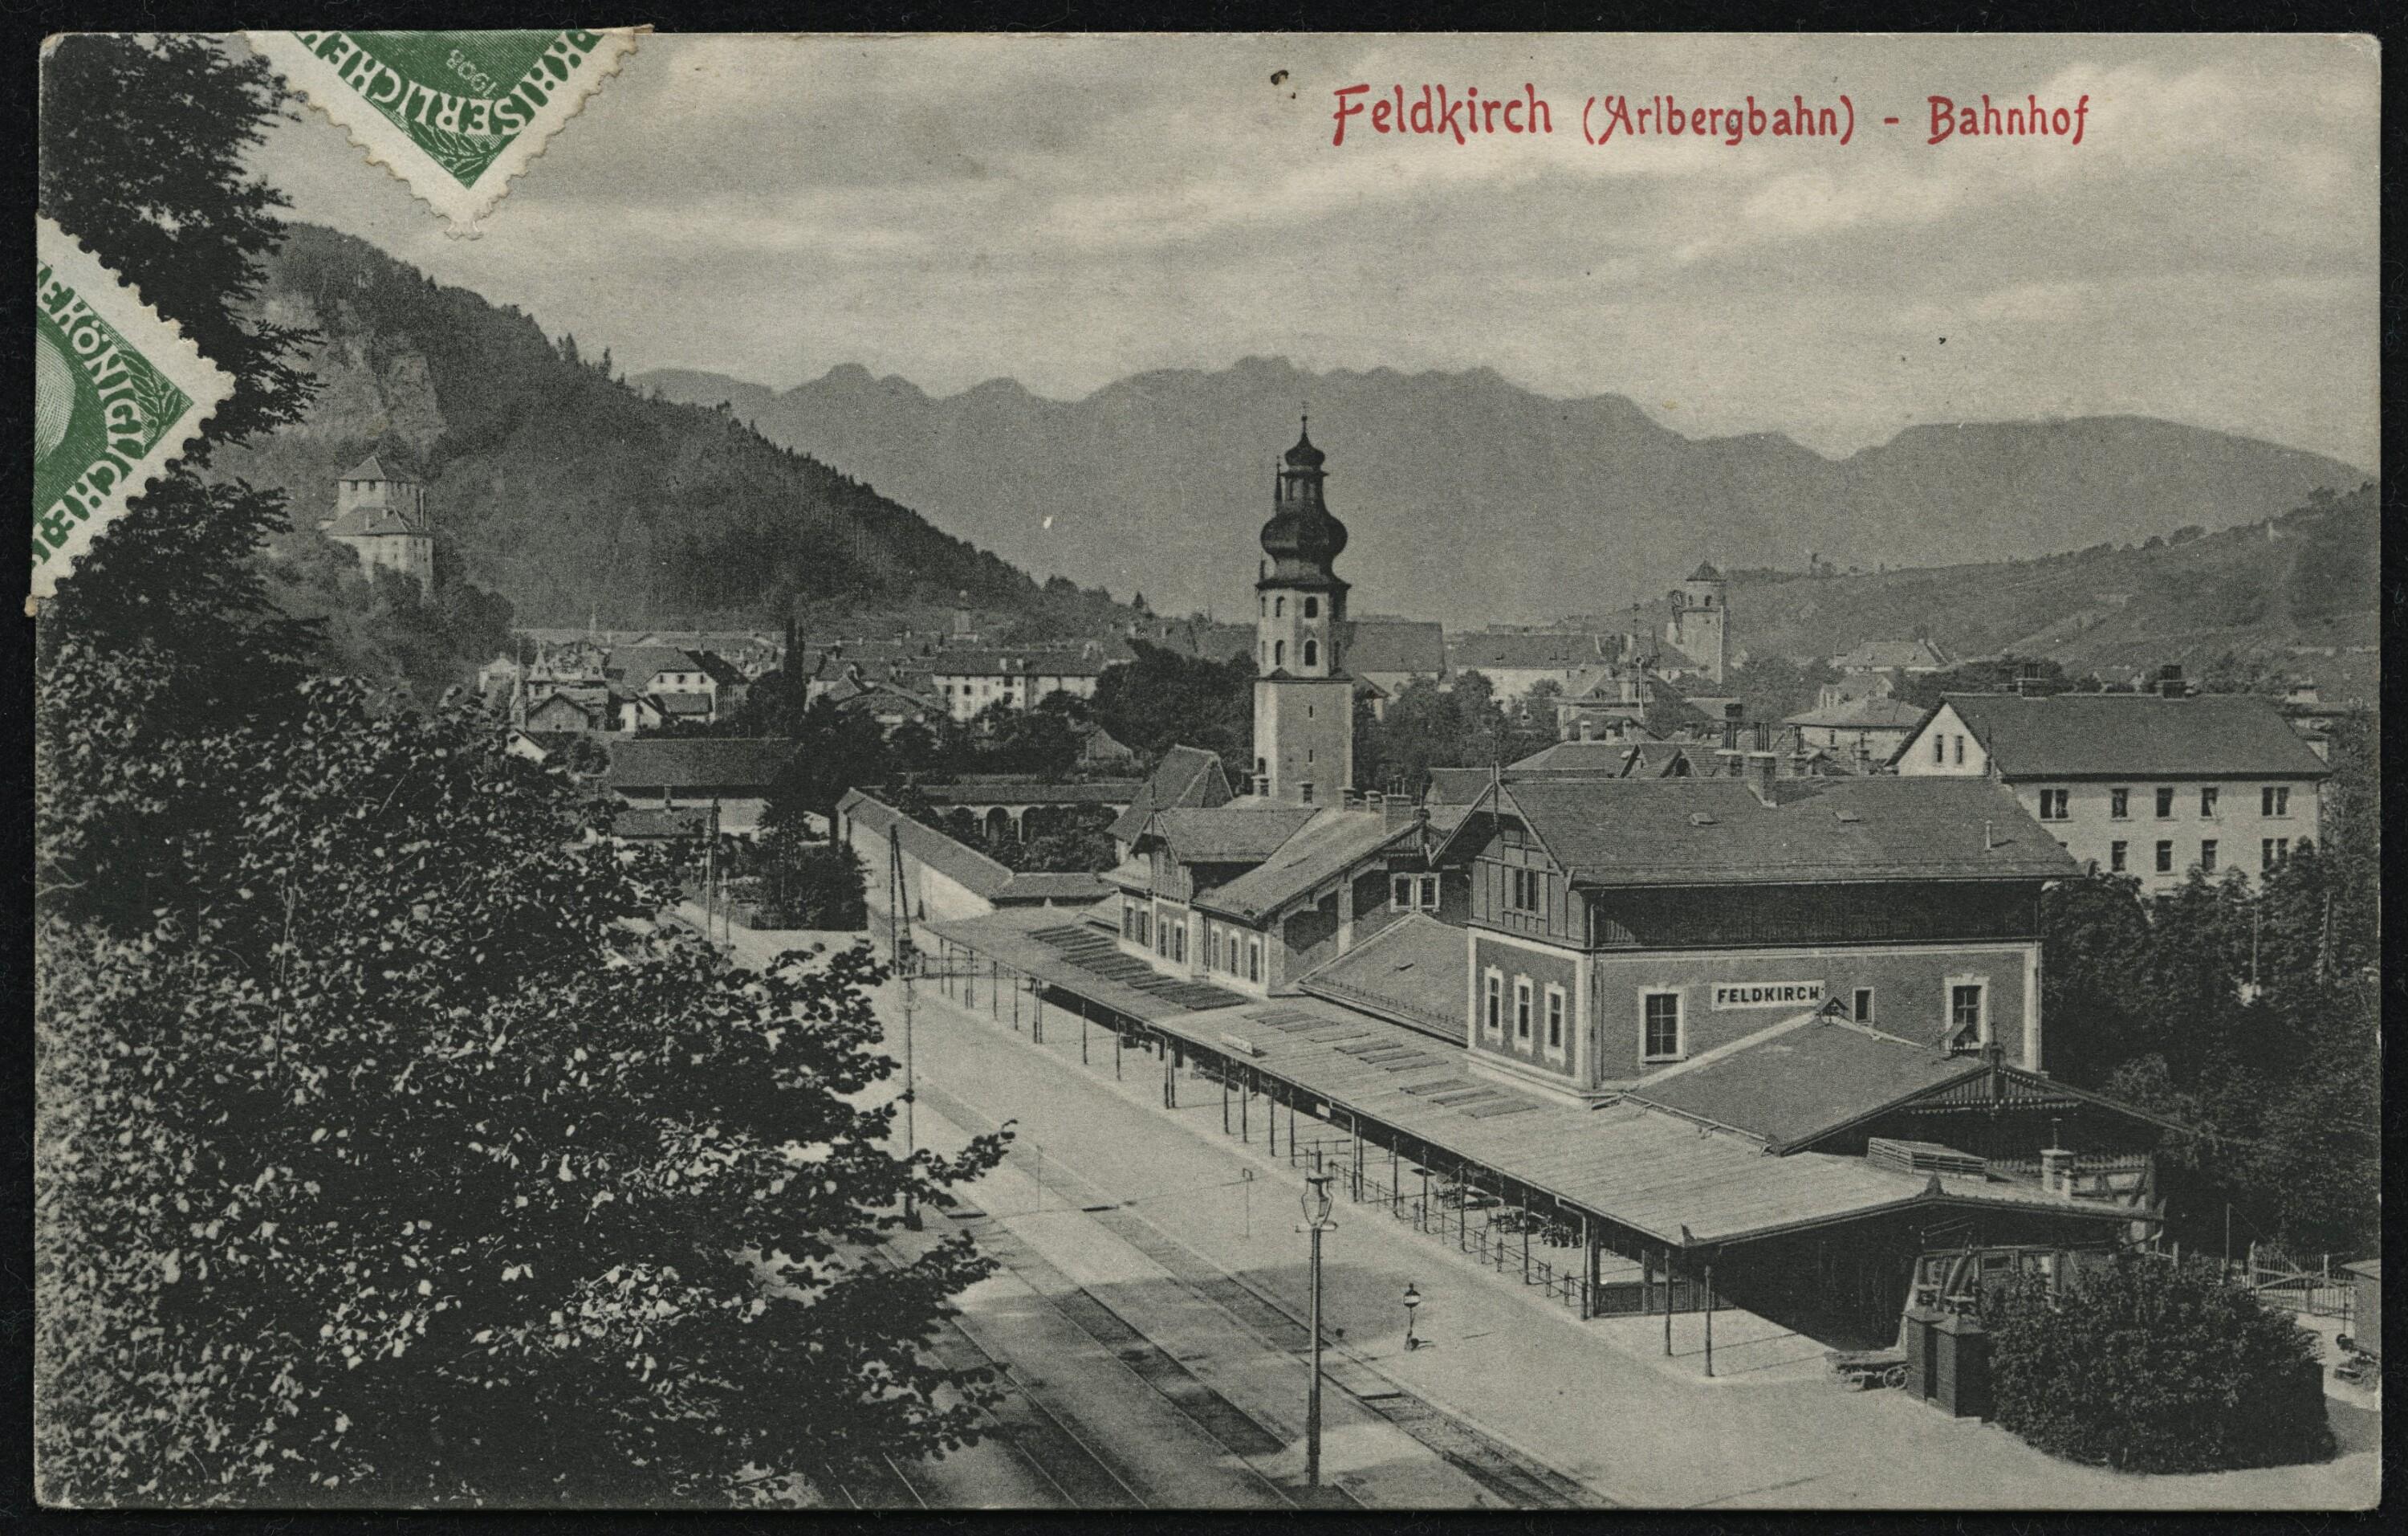 Feldkirch (Arlbergbahn) - Bahnhof></div>


    <hr>
    <div class=